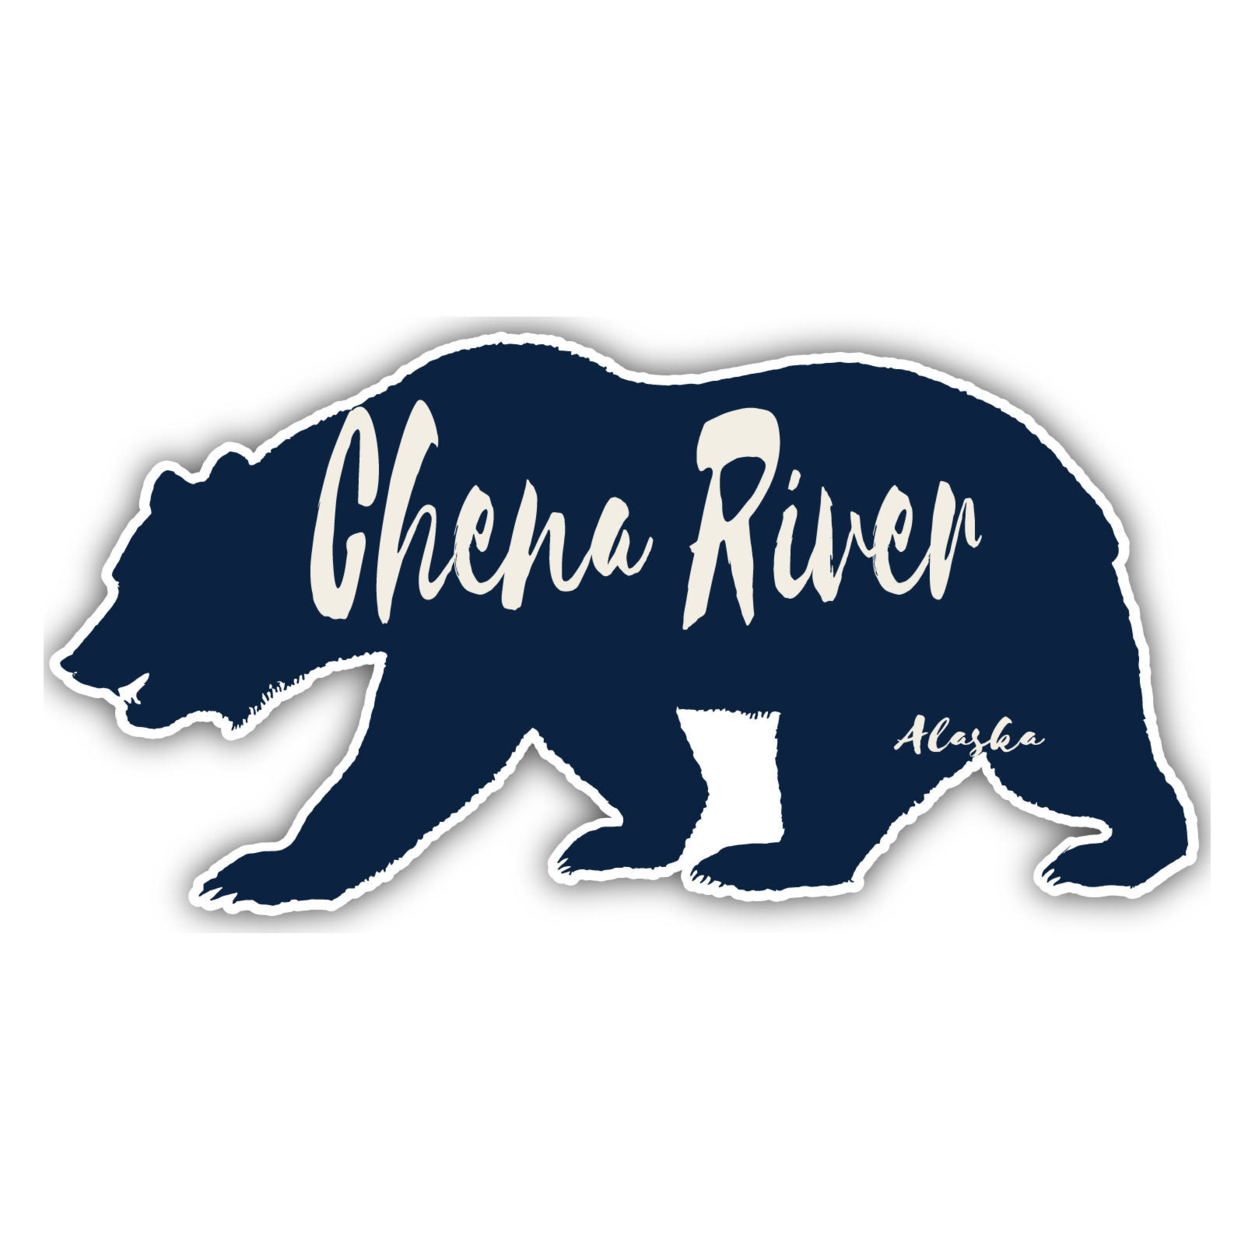 Chena River Alaska Souvenir Decorative Stickers (Choose Theme And Size) - Single Unit, 8-Inch, Bear